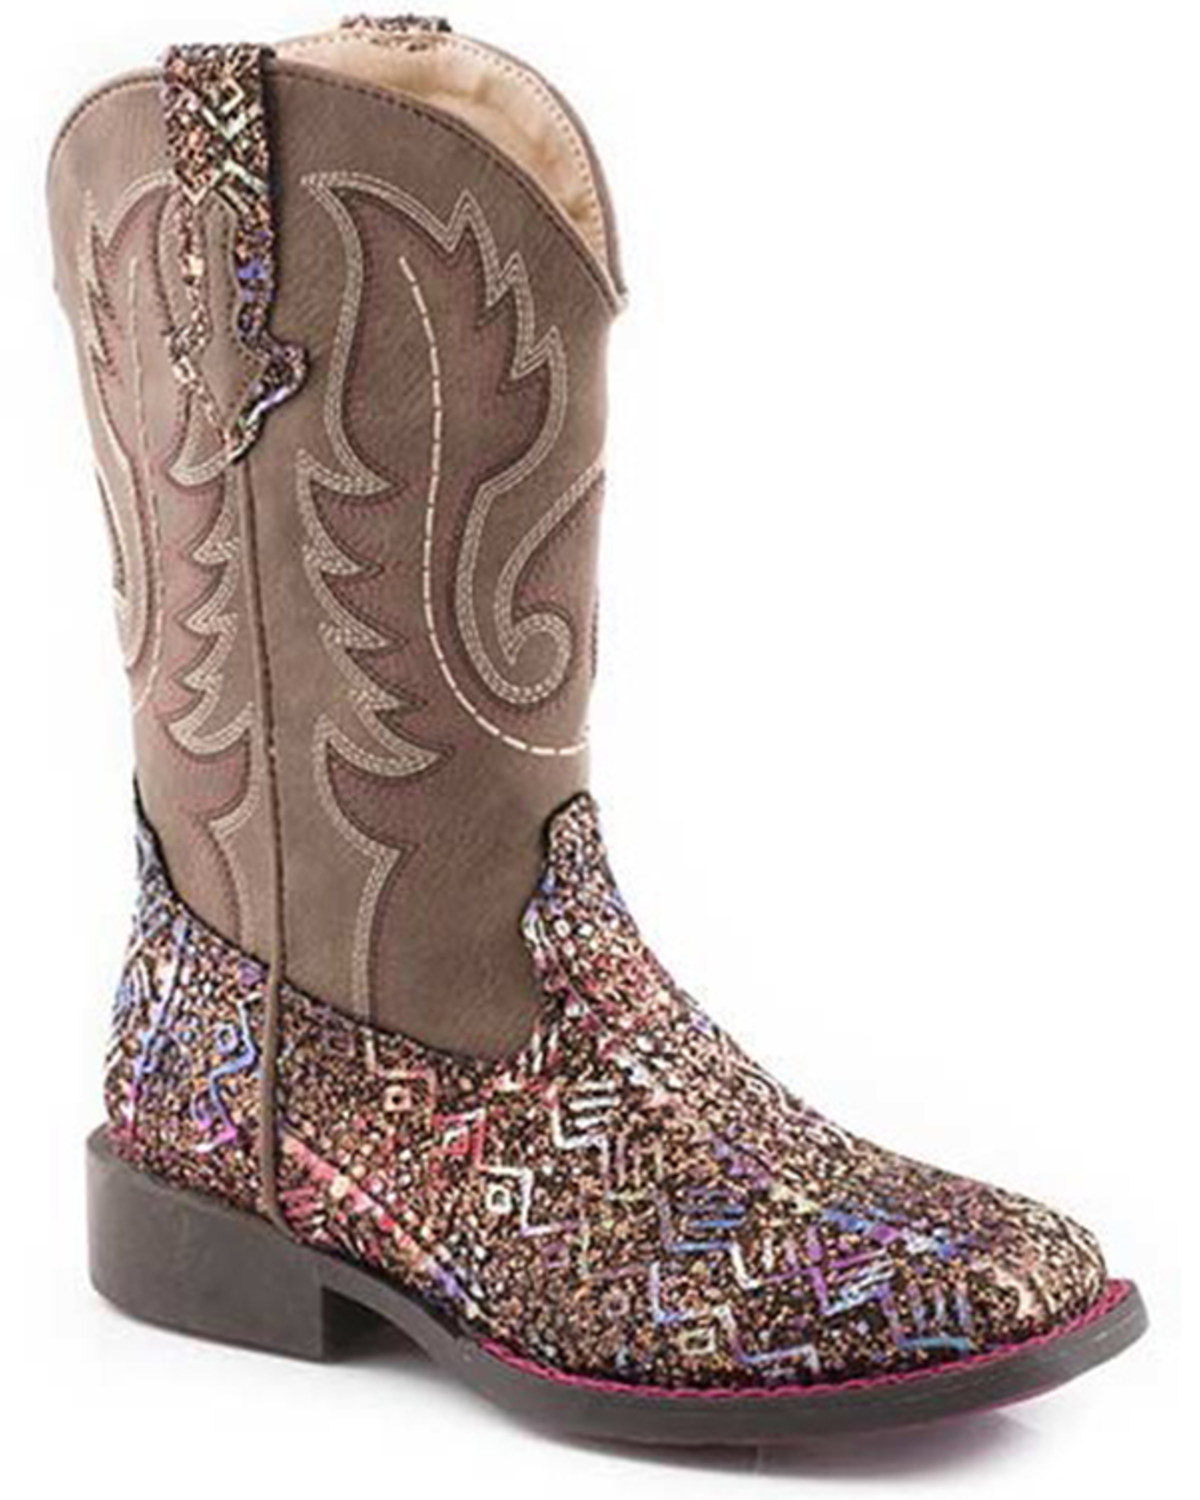 Roper Little Girls' Glitter Southwestern Western Boots - Square Toe